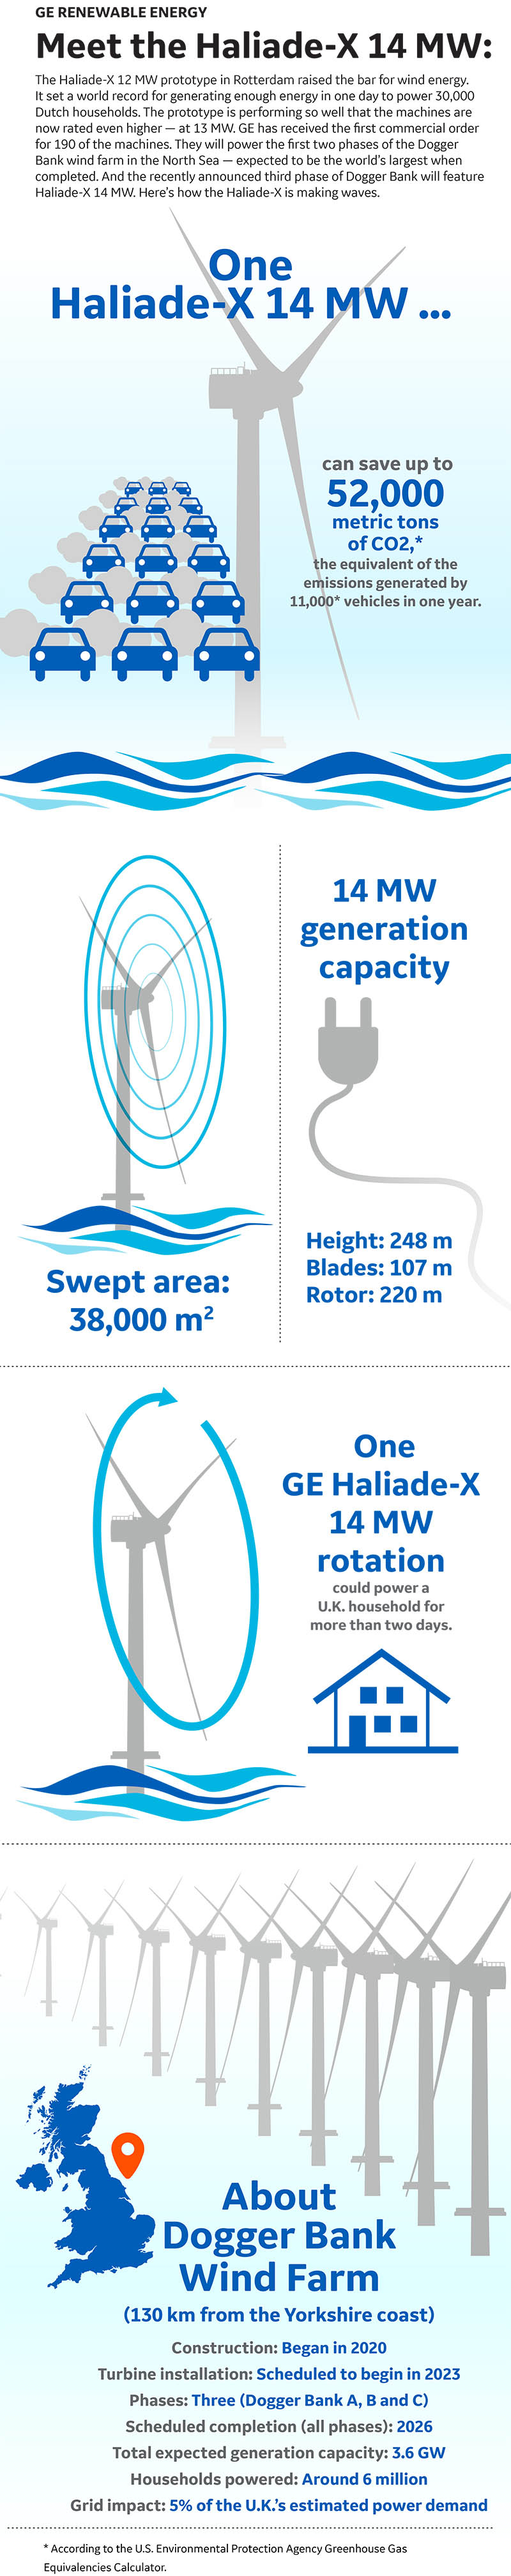 Haliade-X 14 MW